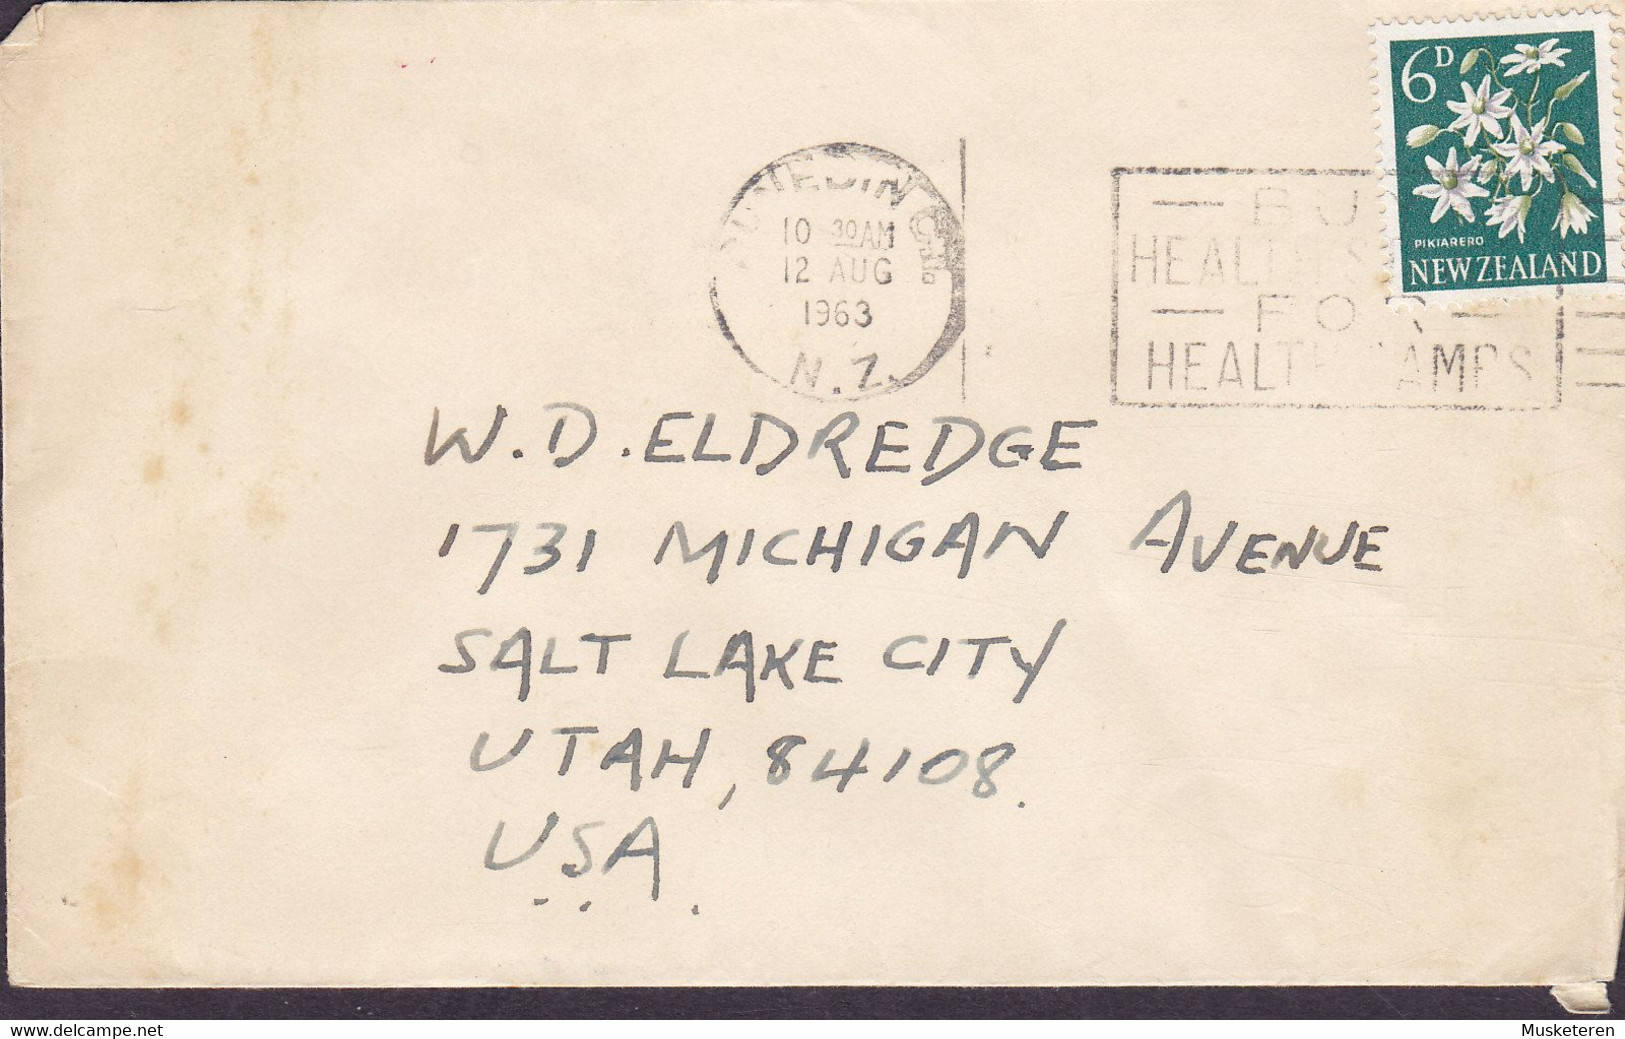 New Zealand Slogan Flamme 'Health Stamps' DUNEDIN 1963 'Petite' Cover Brief SALT LAKE CITY Utah United States - Storia Postale